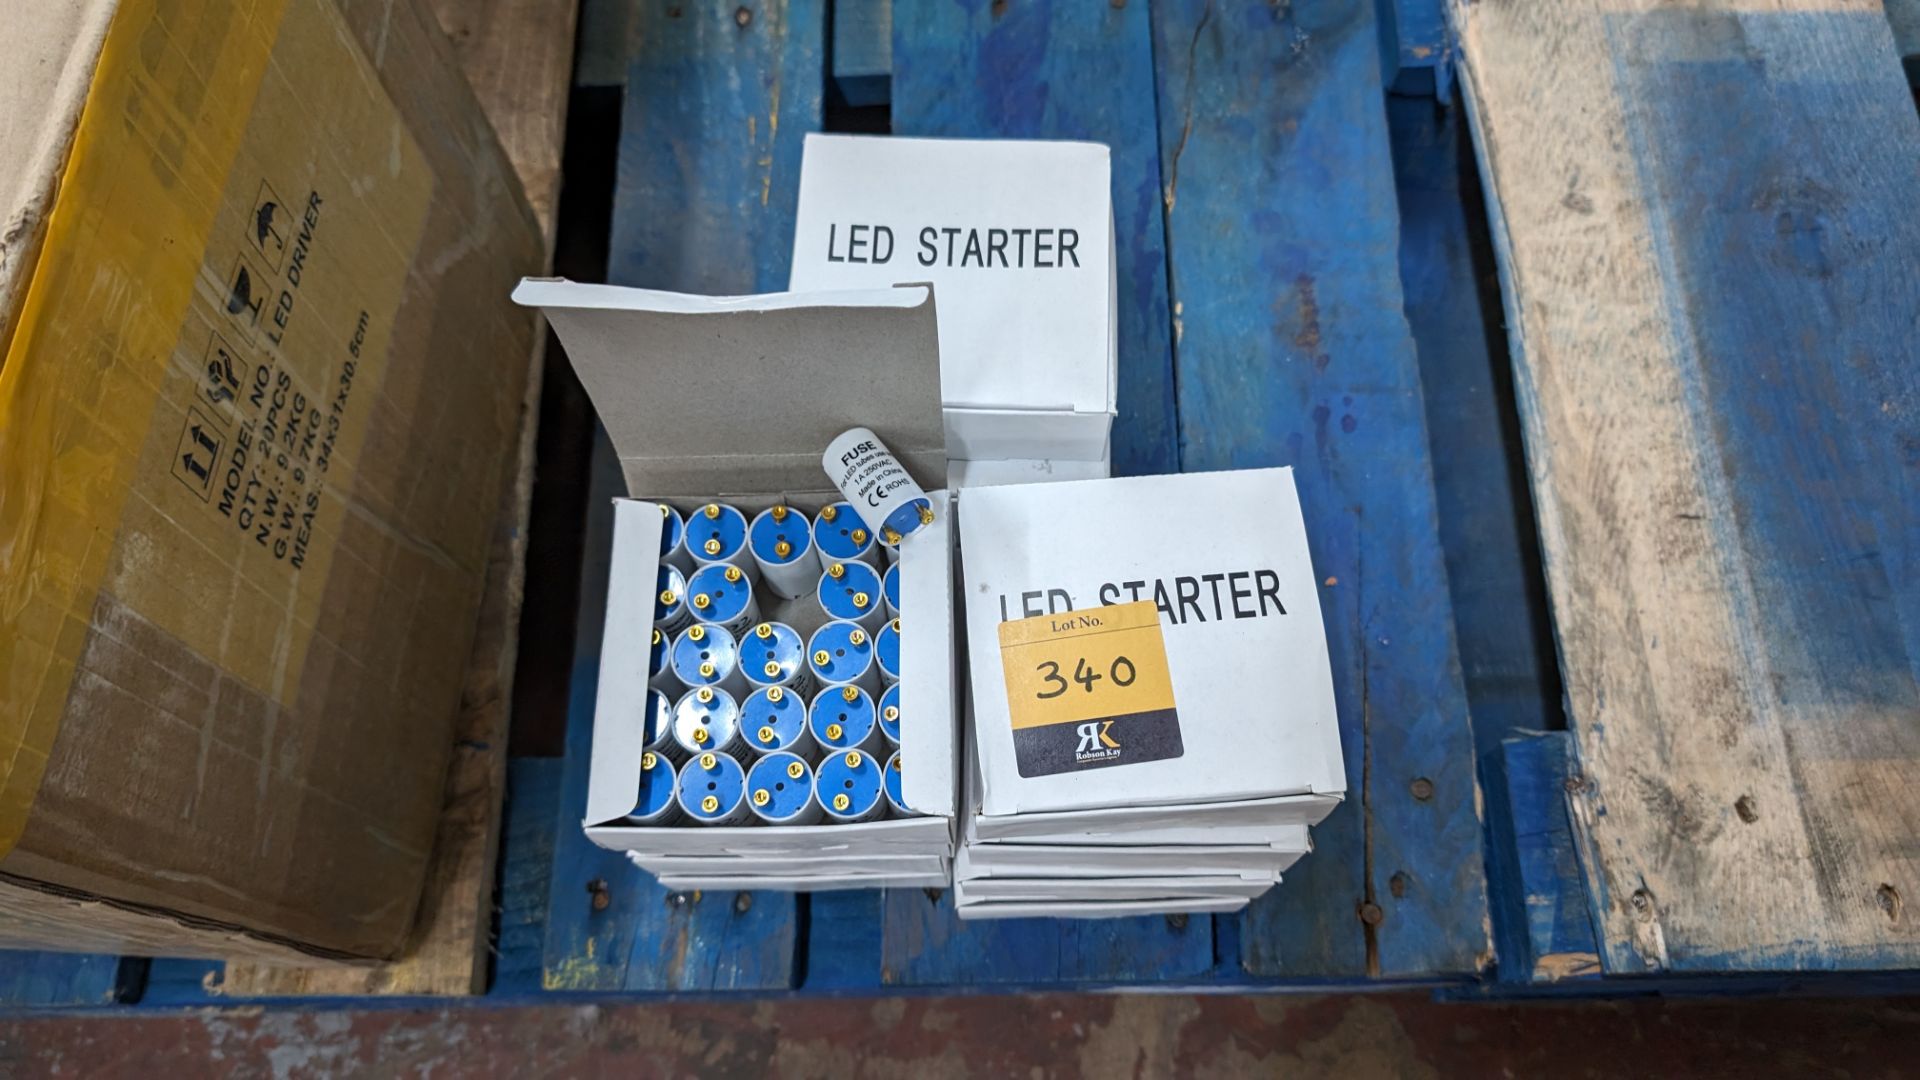 300 off LED starter fuses - 8 boxes